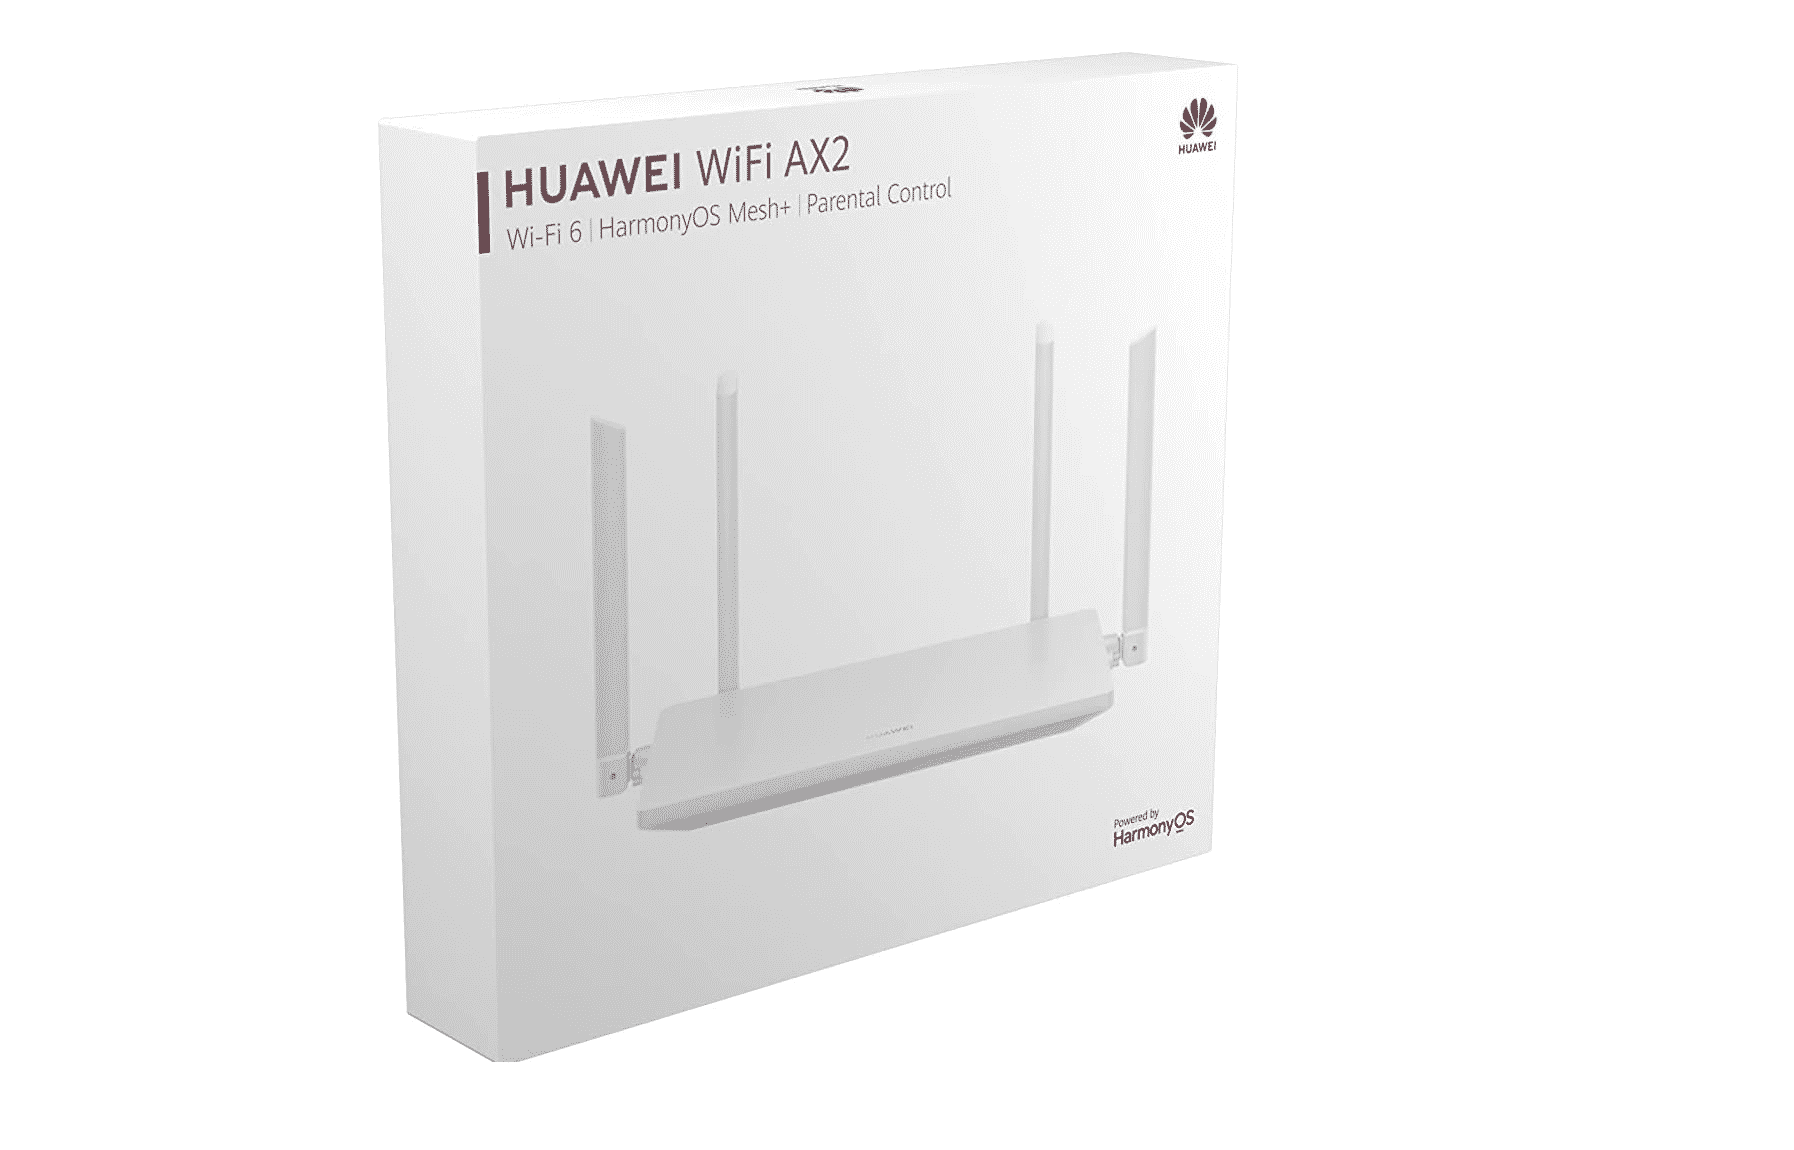 Huawei lança seu novo roteador huawei wifi ax2 para consumidores no brasil | d1dfac5b imagem 2022 04 26 181644202 | hardware, huawei, mobile, pc, roteador, wi-fi | huawei wifi ax2 notícias